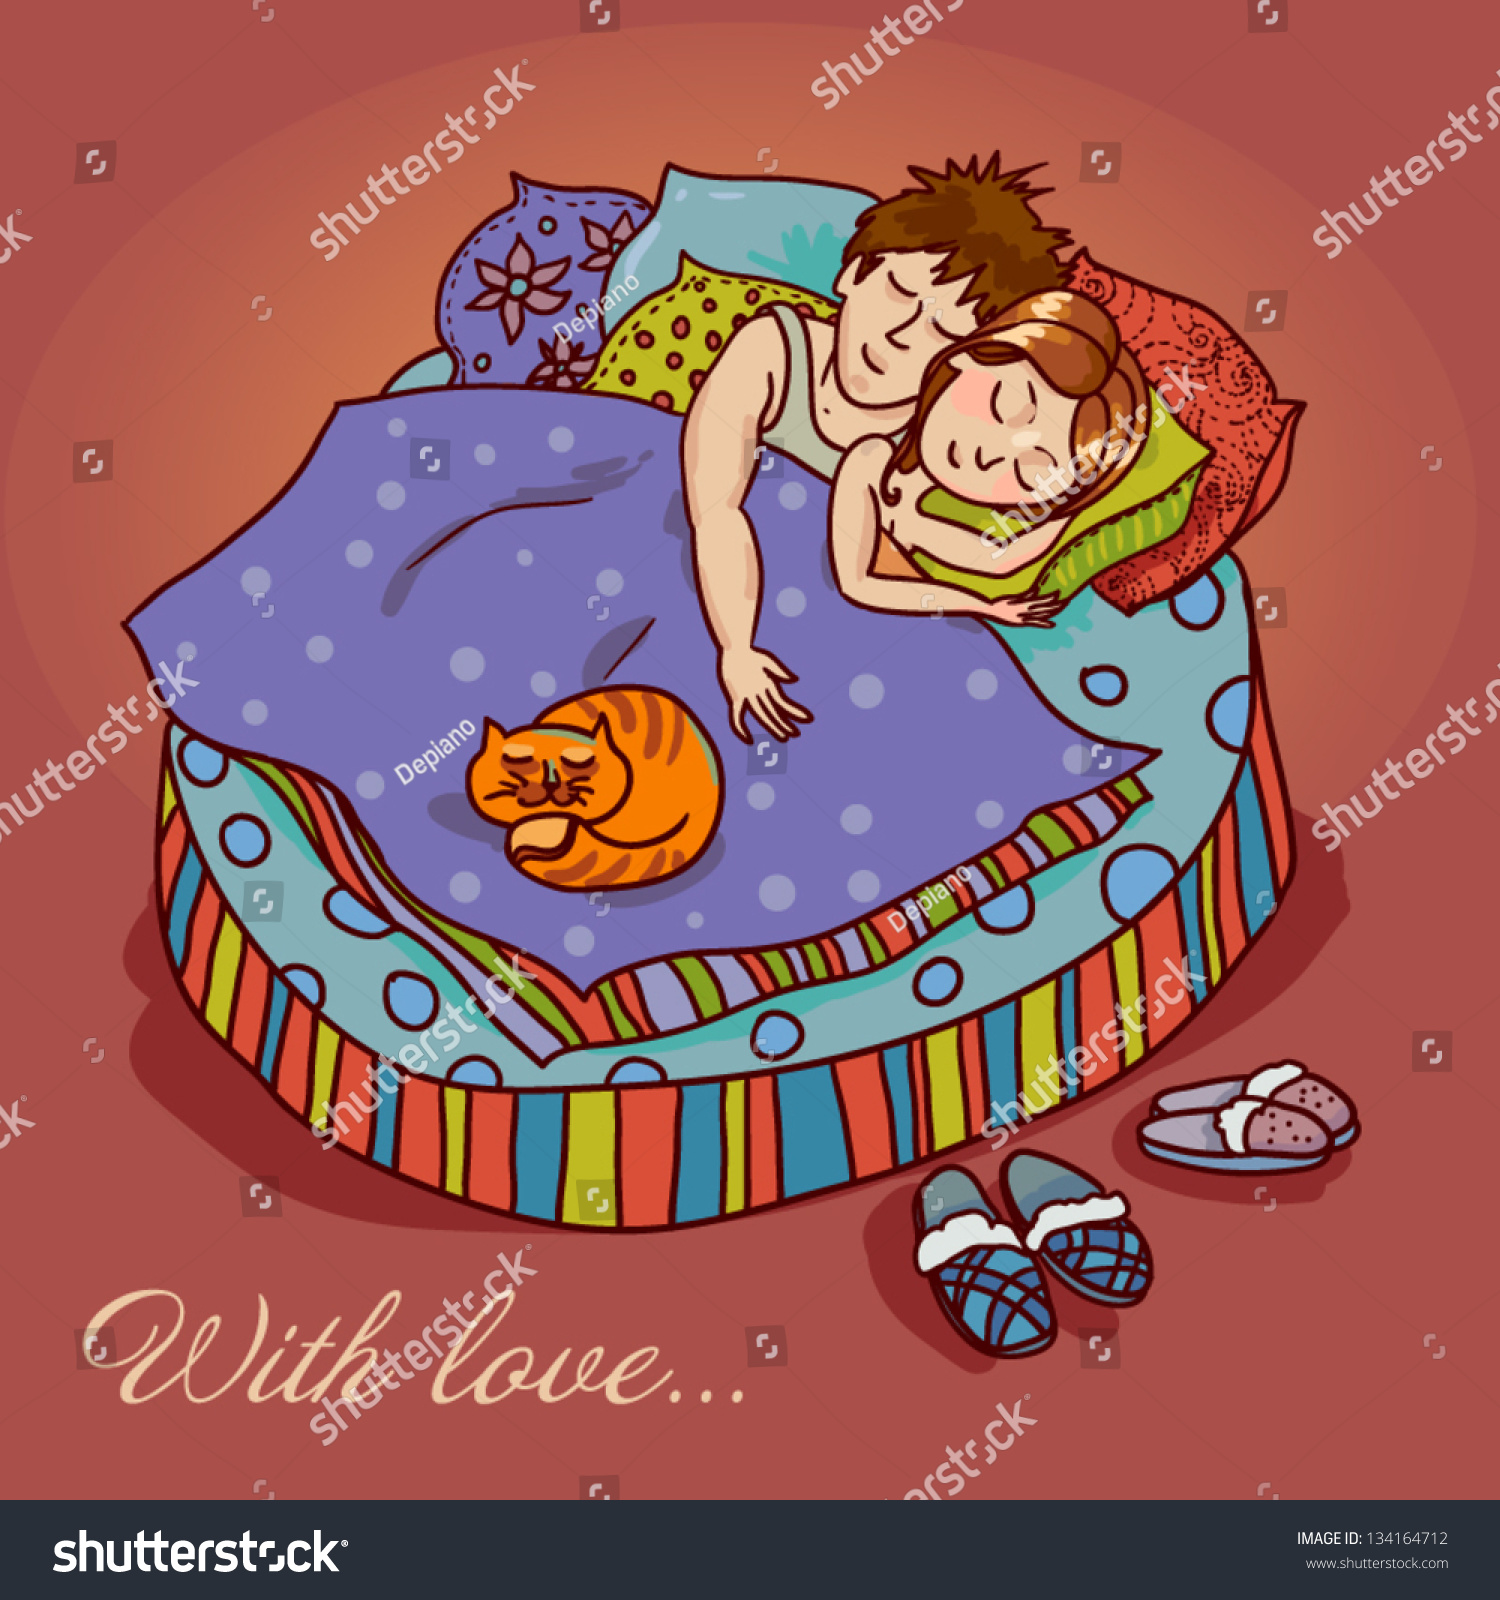 Vektor Stok Pair Lovers Sleeping Illustration Cartoon Style Tanpa Royalti 134164712 Shutterstock